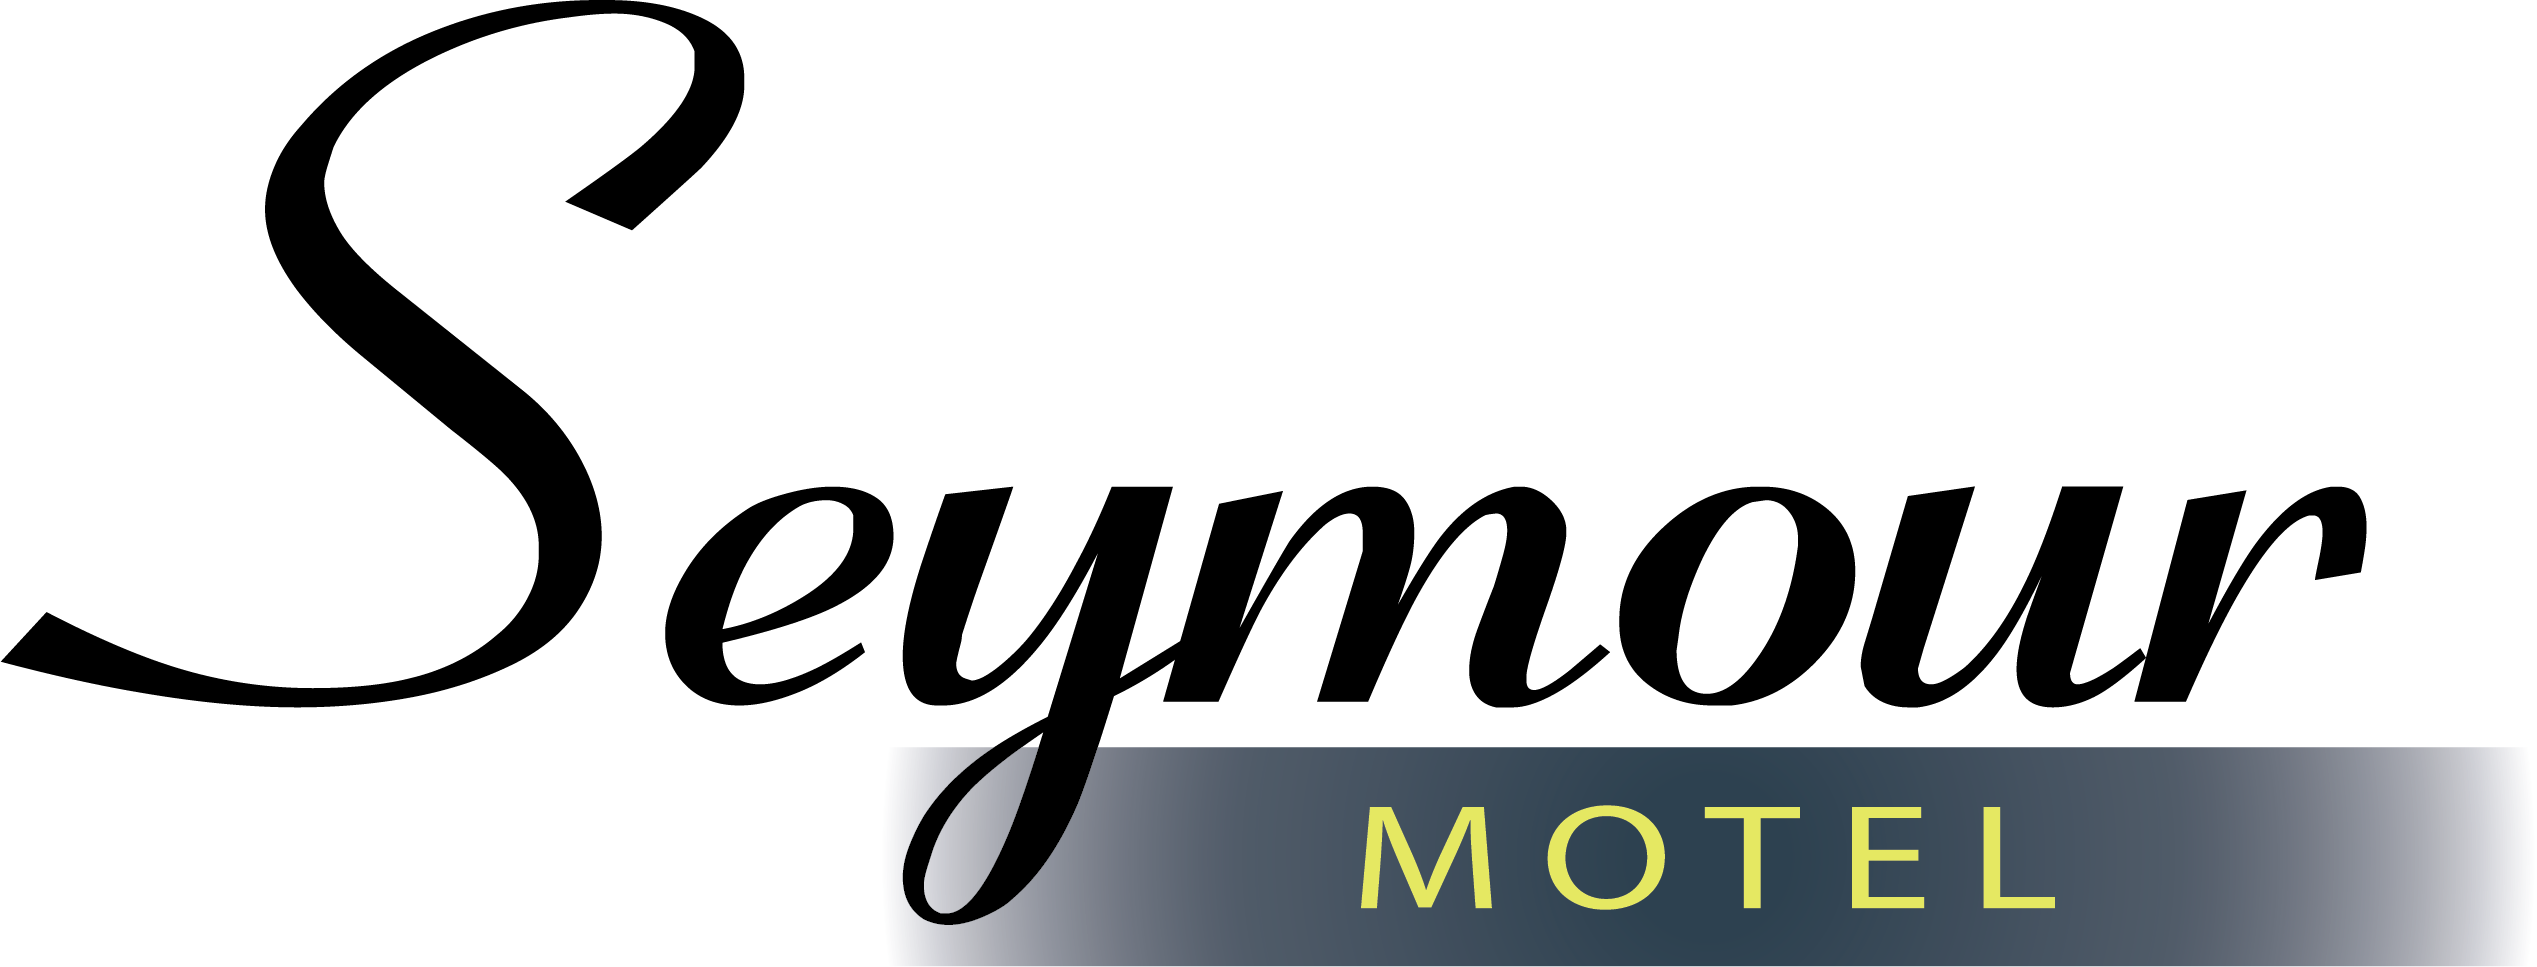 Seymour Motel - Seymour Accommodation - Best Seymour Motel